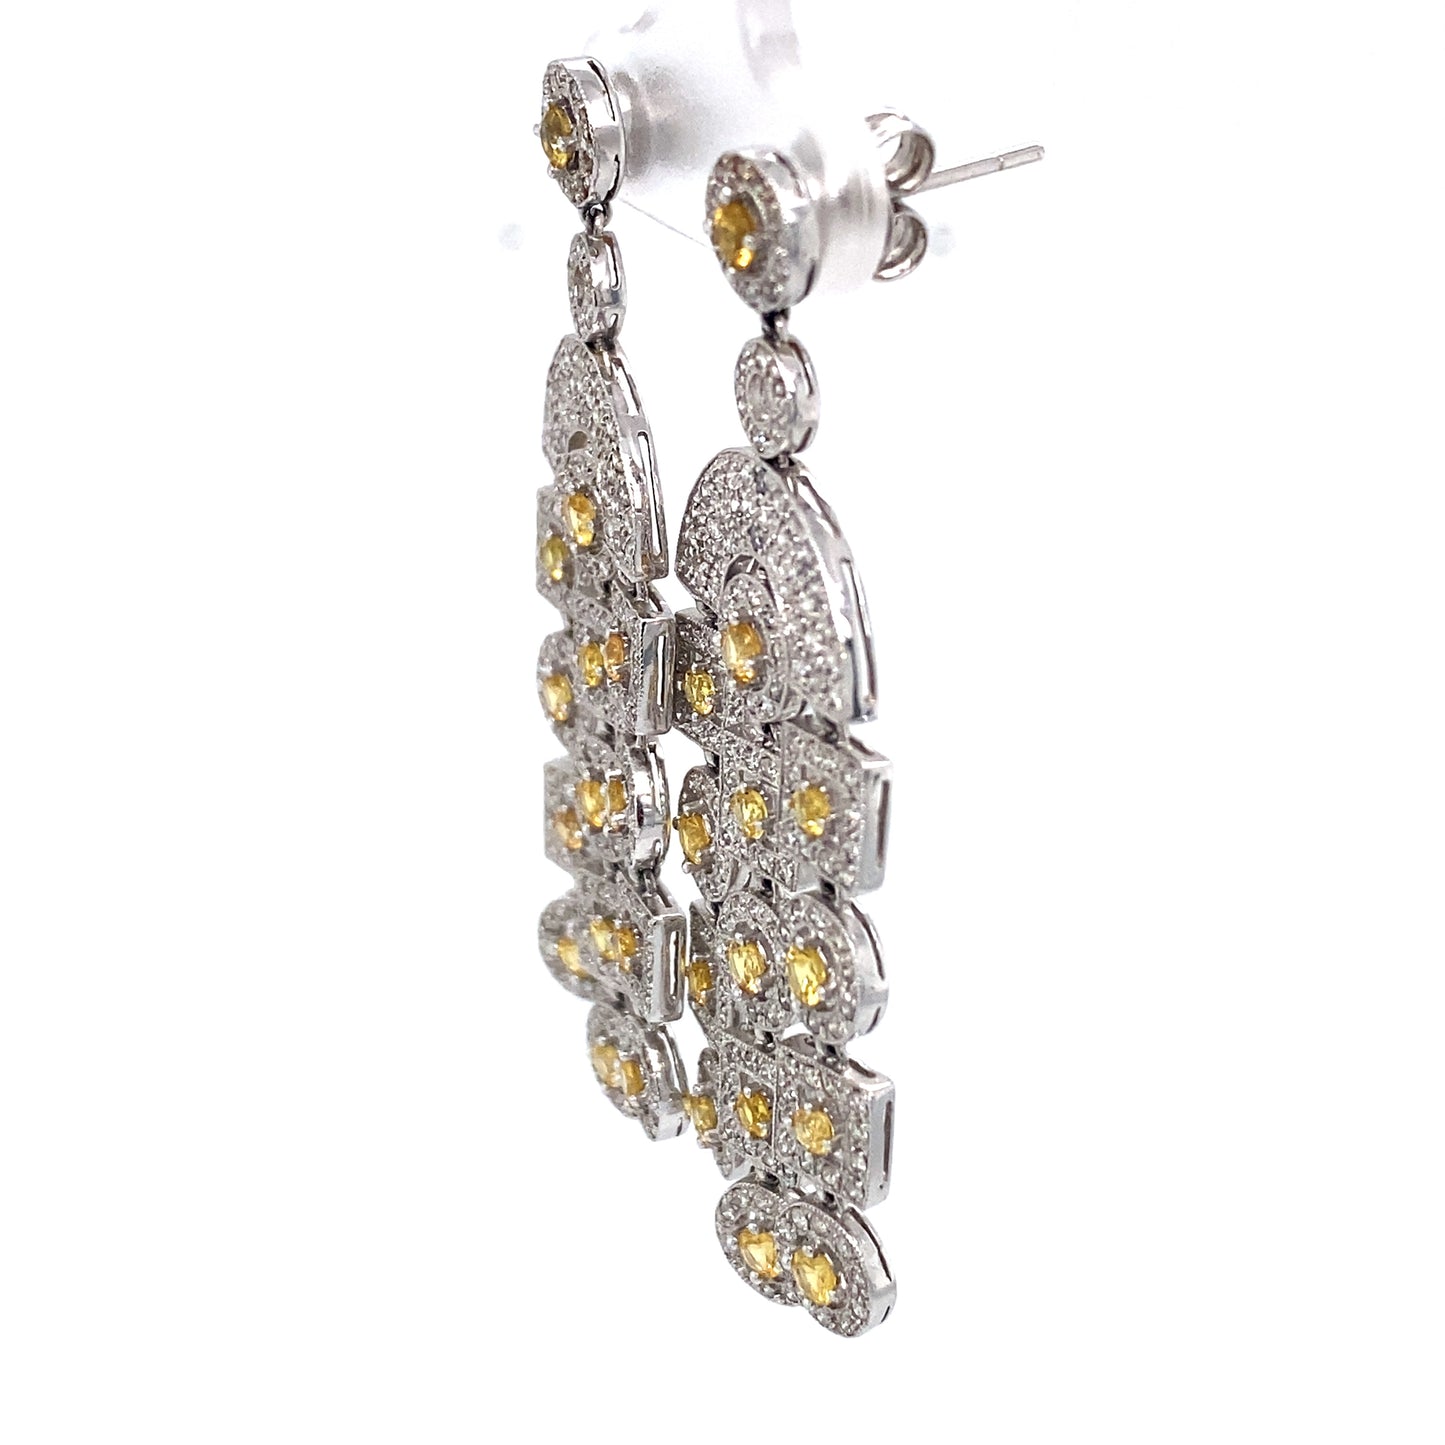 Circa 1960s Retro Yellow Topaz and 3.0 Carat Diamond Chandelier Earrings in 18K White Gold